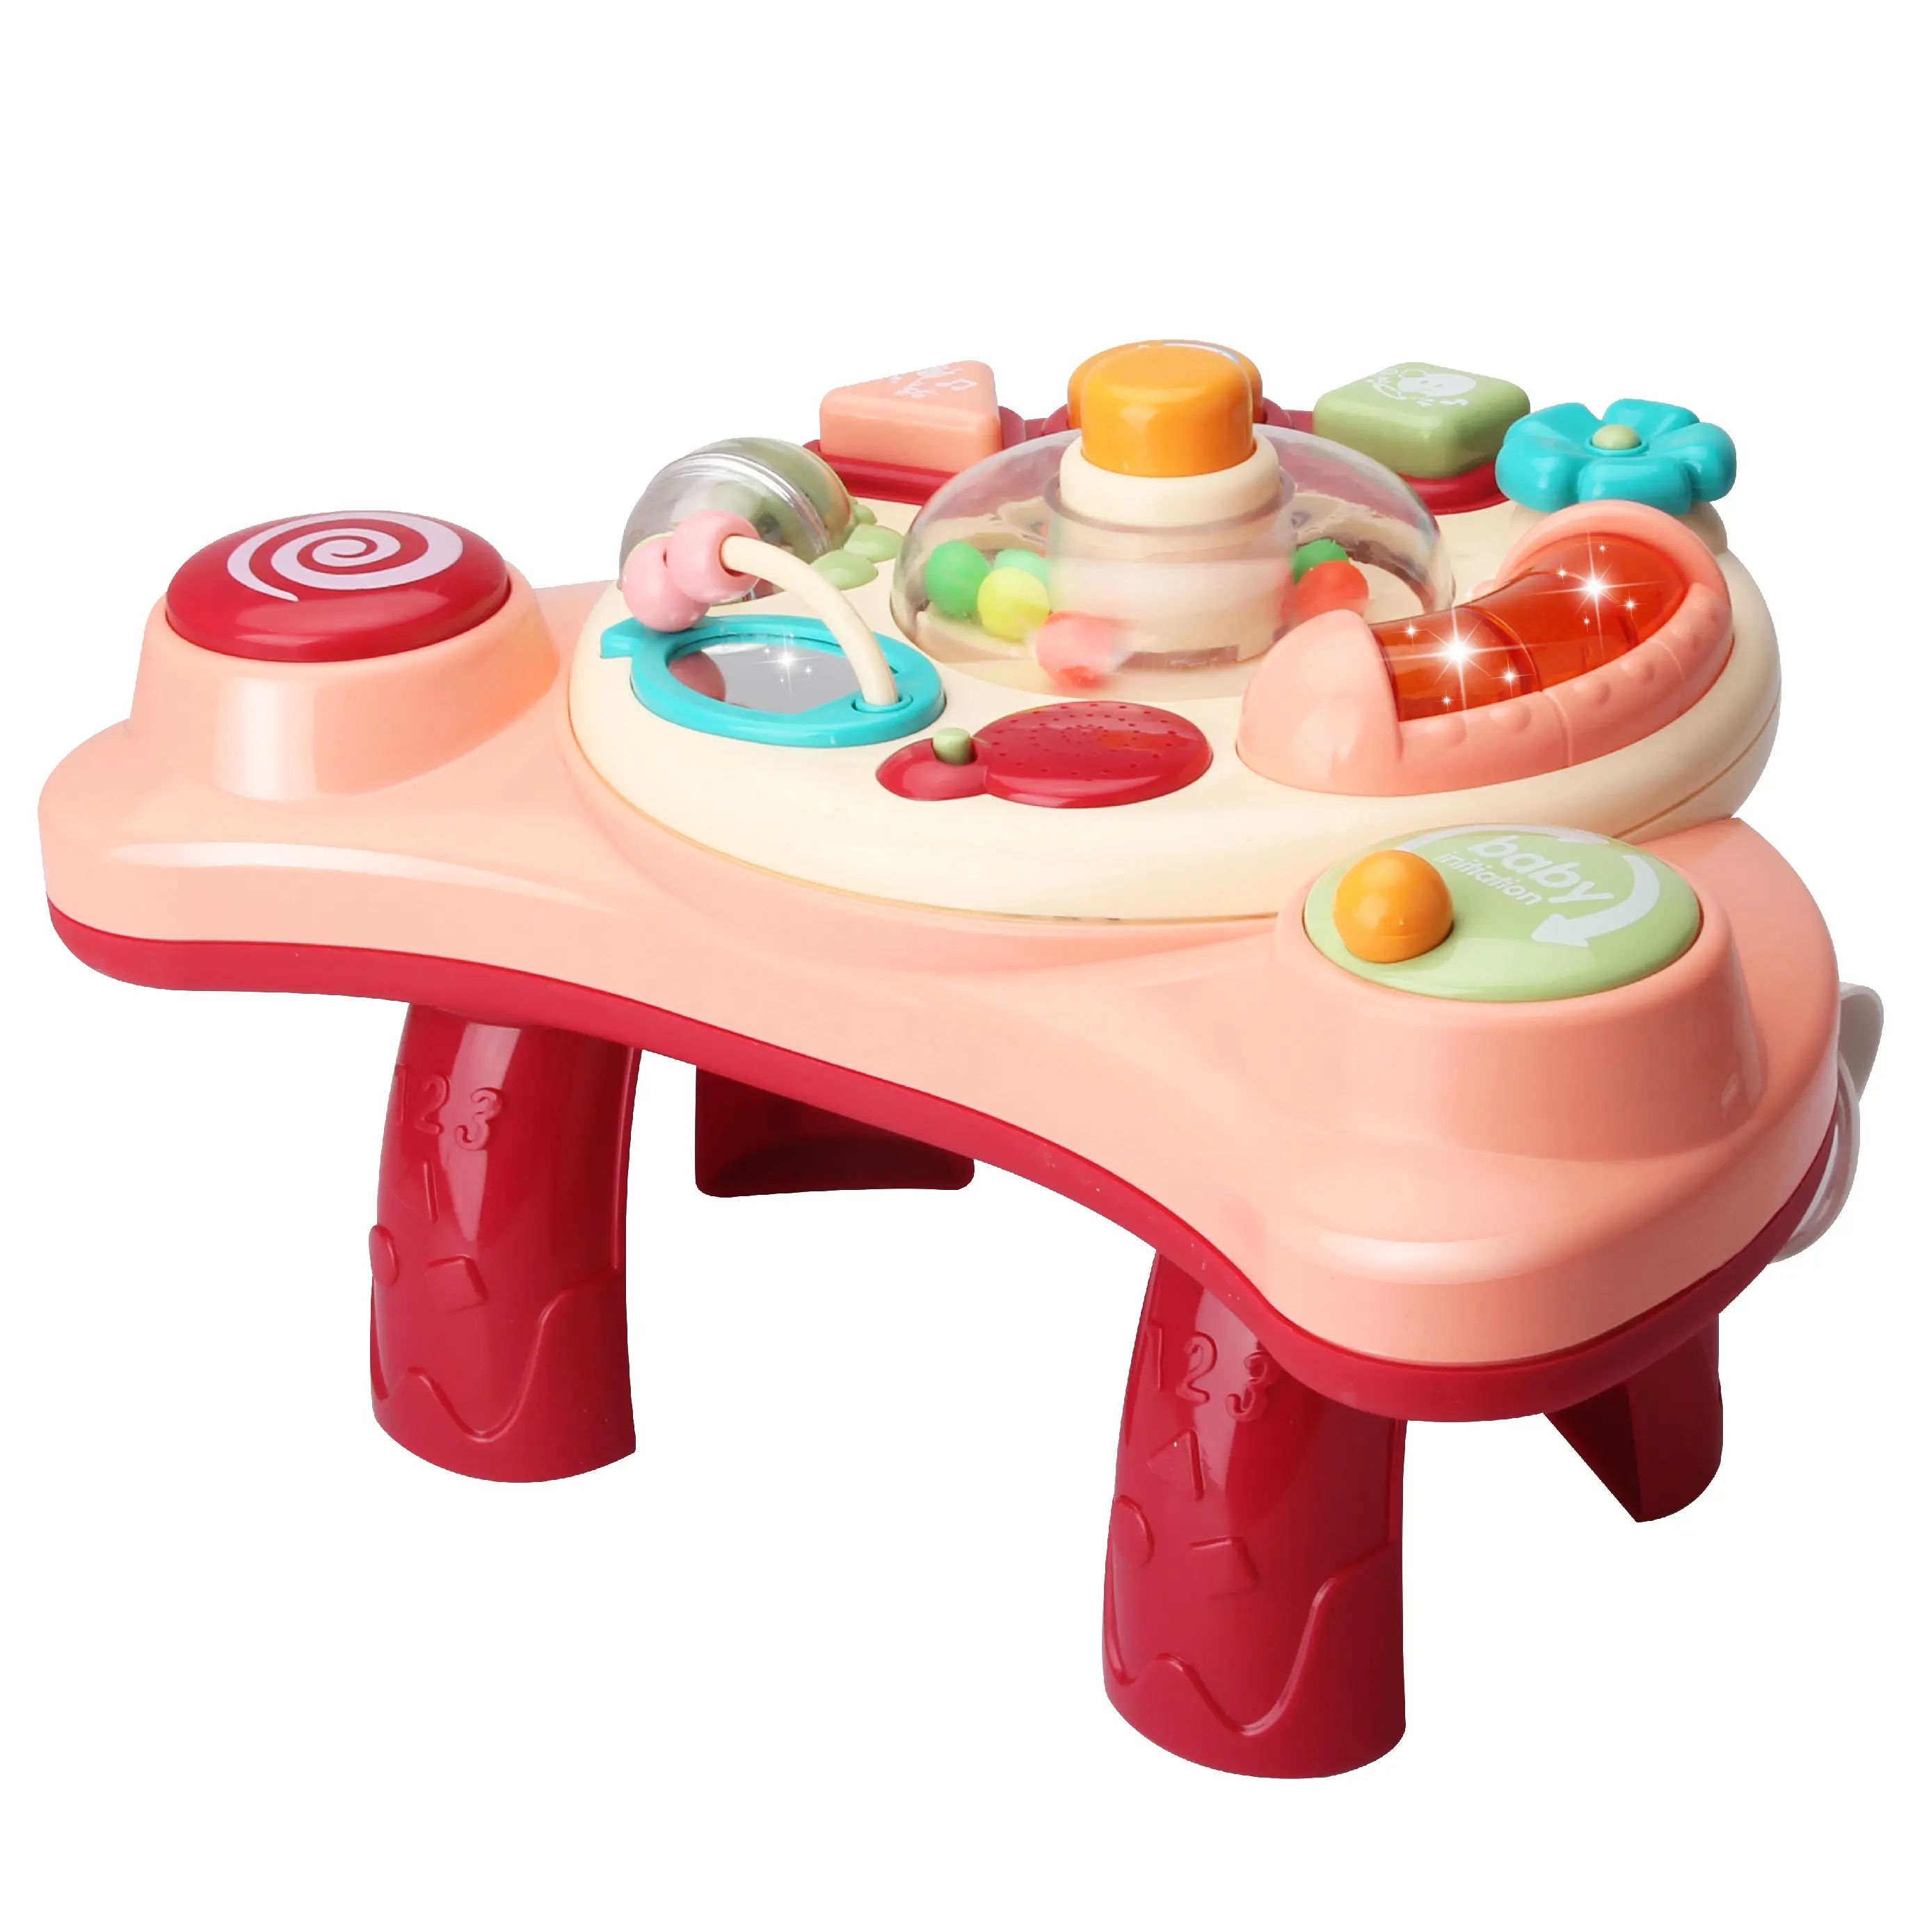 शिशु प्रारंभिक शिक्षा बहु-समारोह इलेक्ट्रॉनिक खिलौने 3in1 बच्चे संगीत सीखने अध्ययन टेबल बच्चे बाड़ फांसी पियानो खिलौने